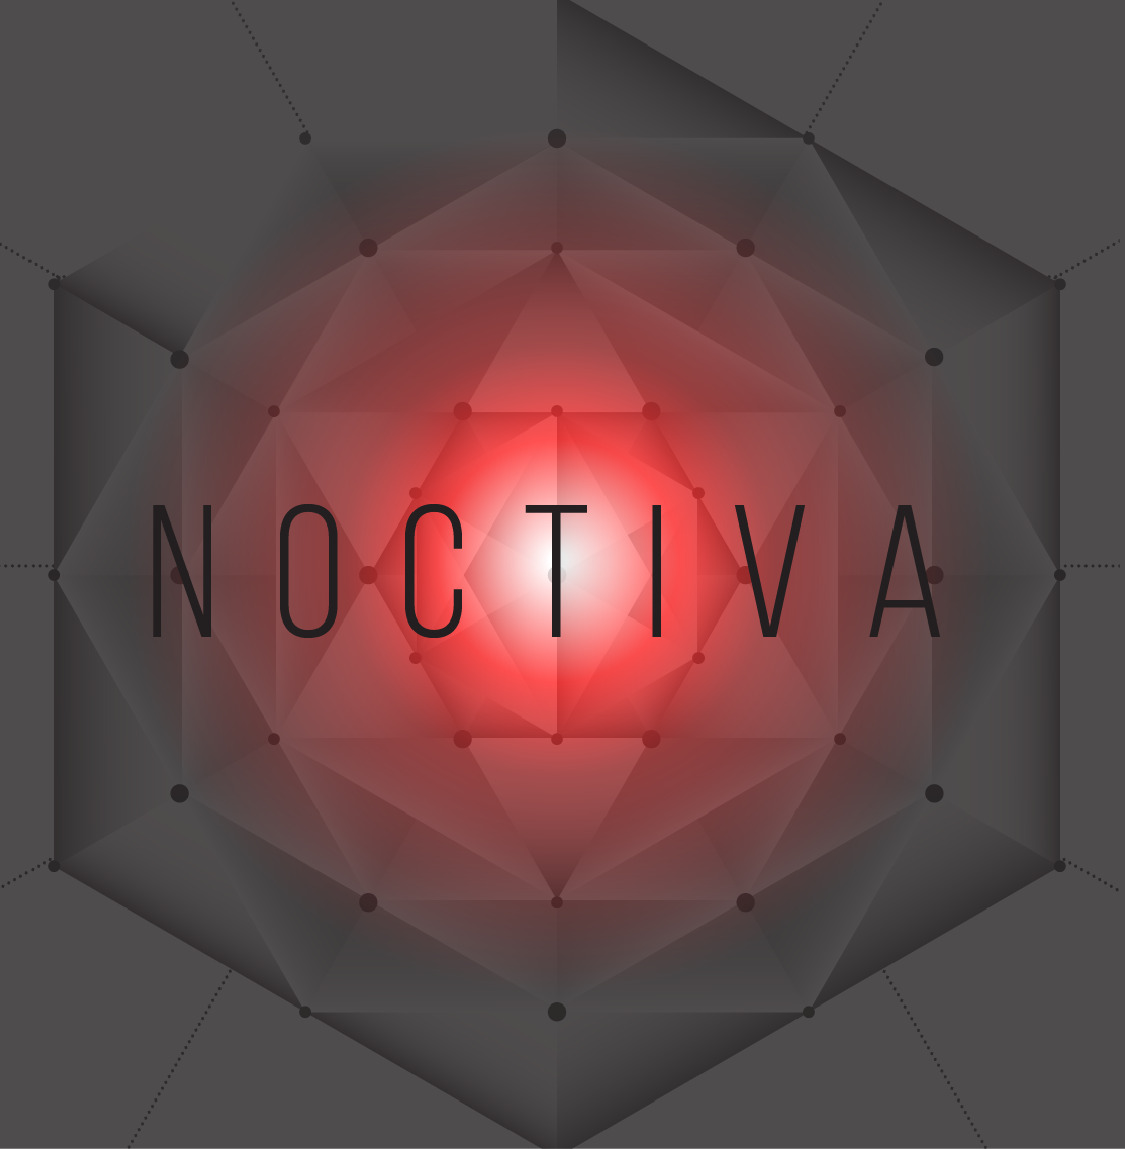 Noctiva – Divine Intervention (Simon Bostock Remix)